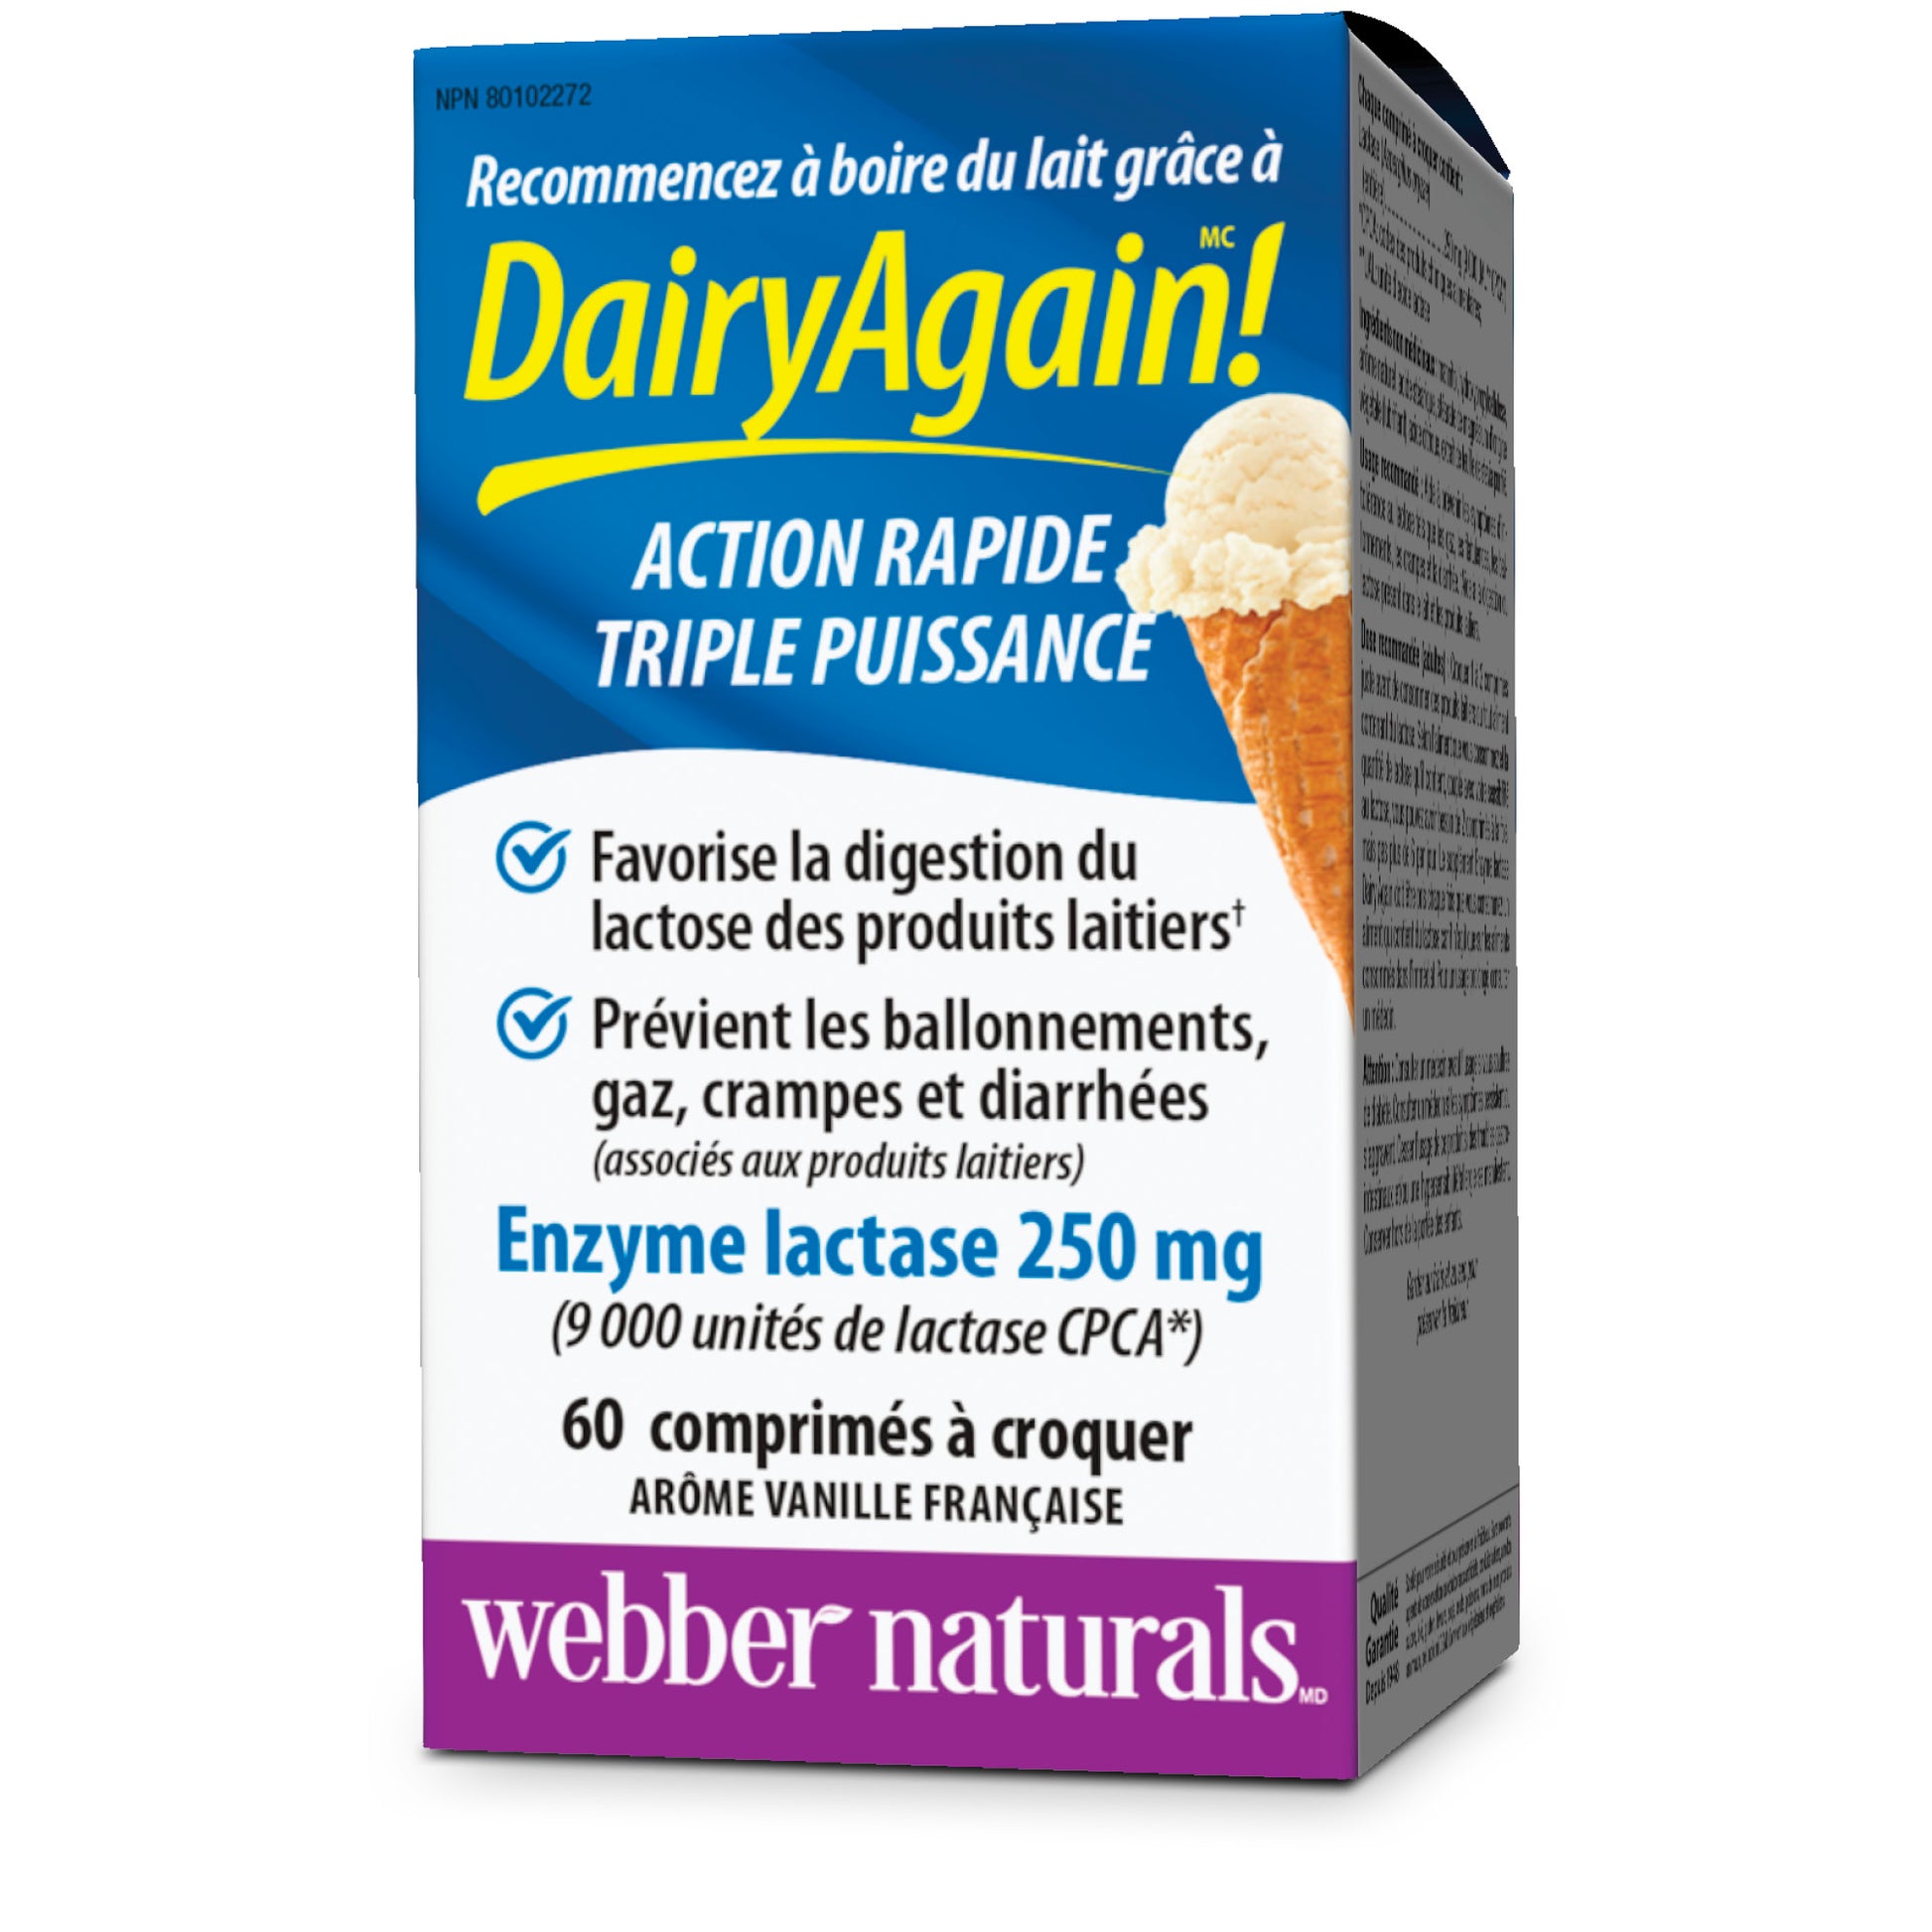 Dairy Again!(MC) Enzyme lactase 250 mg arôme vanille française for Webber Naturals|v|hi-res|WN3696